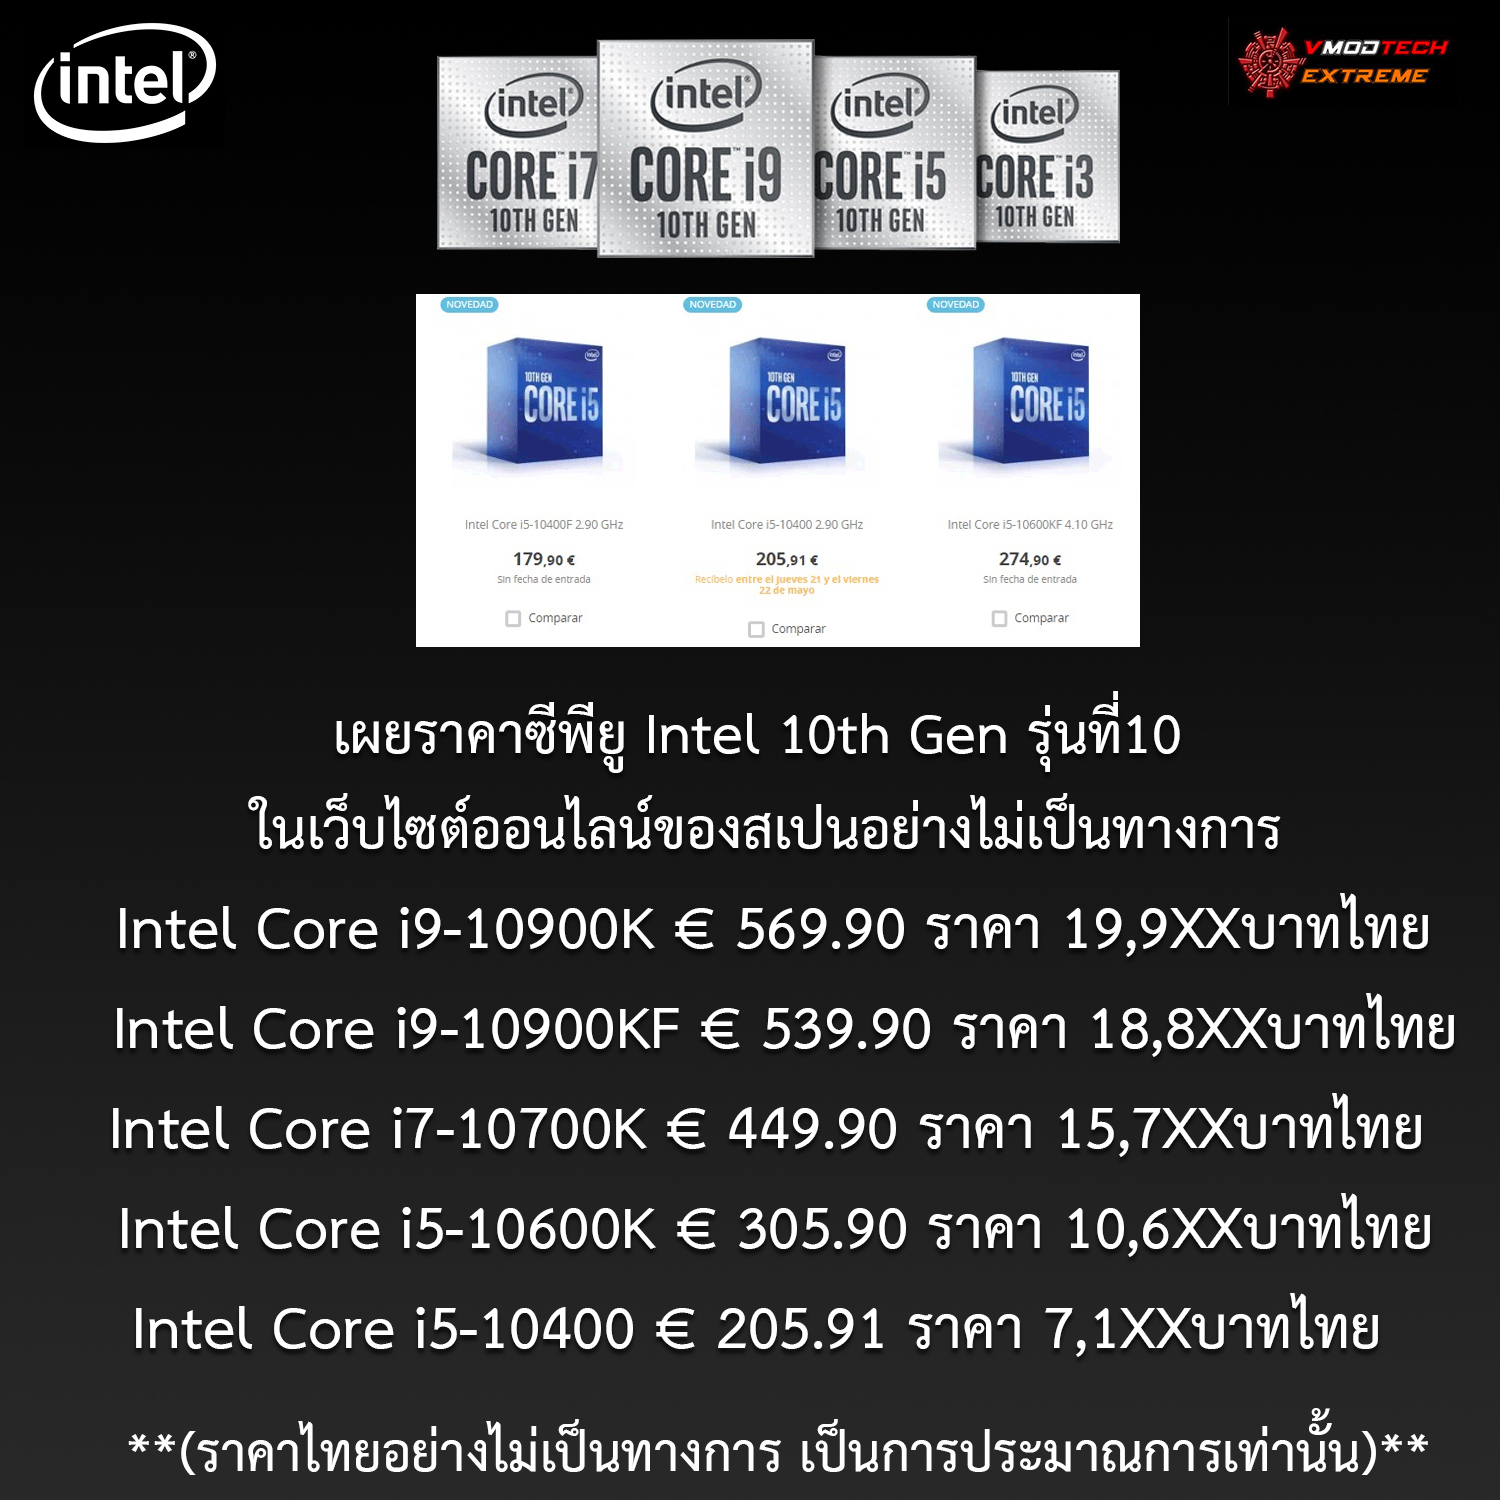 intel 10th gen price list spain หลุด!! เว็บไซต์ออนไลน์ของประเทศสเปนเผยราคาซีพียู Intel 10th Gen รุ่นใหม่ล่าสุดอย่างไม่เป็นทางการ  